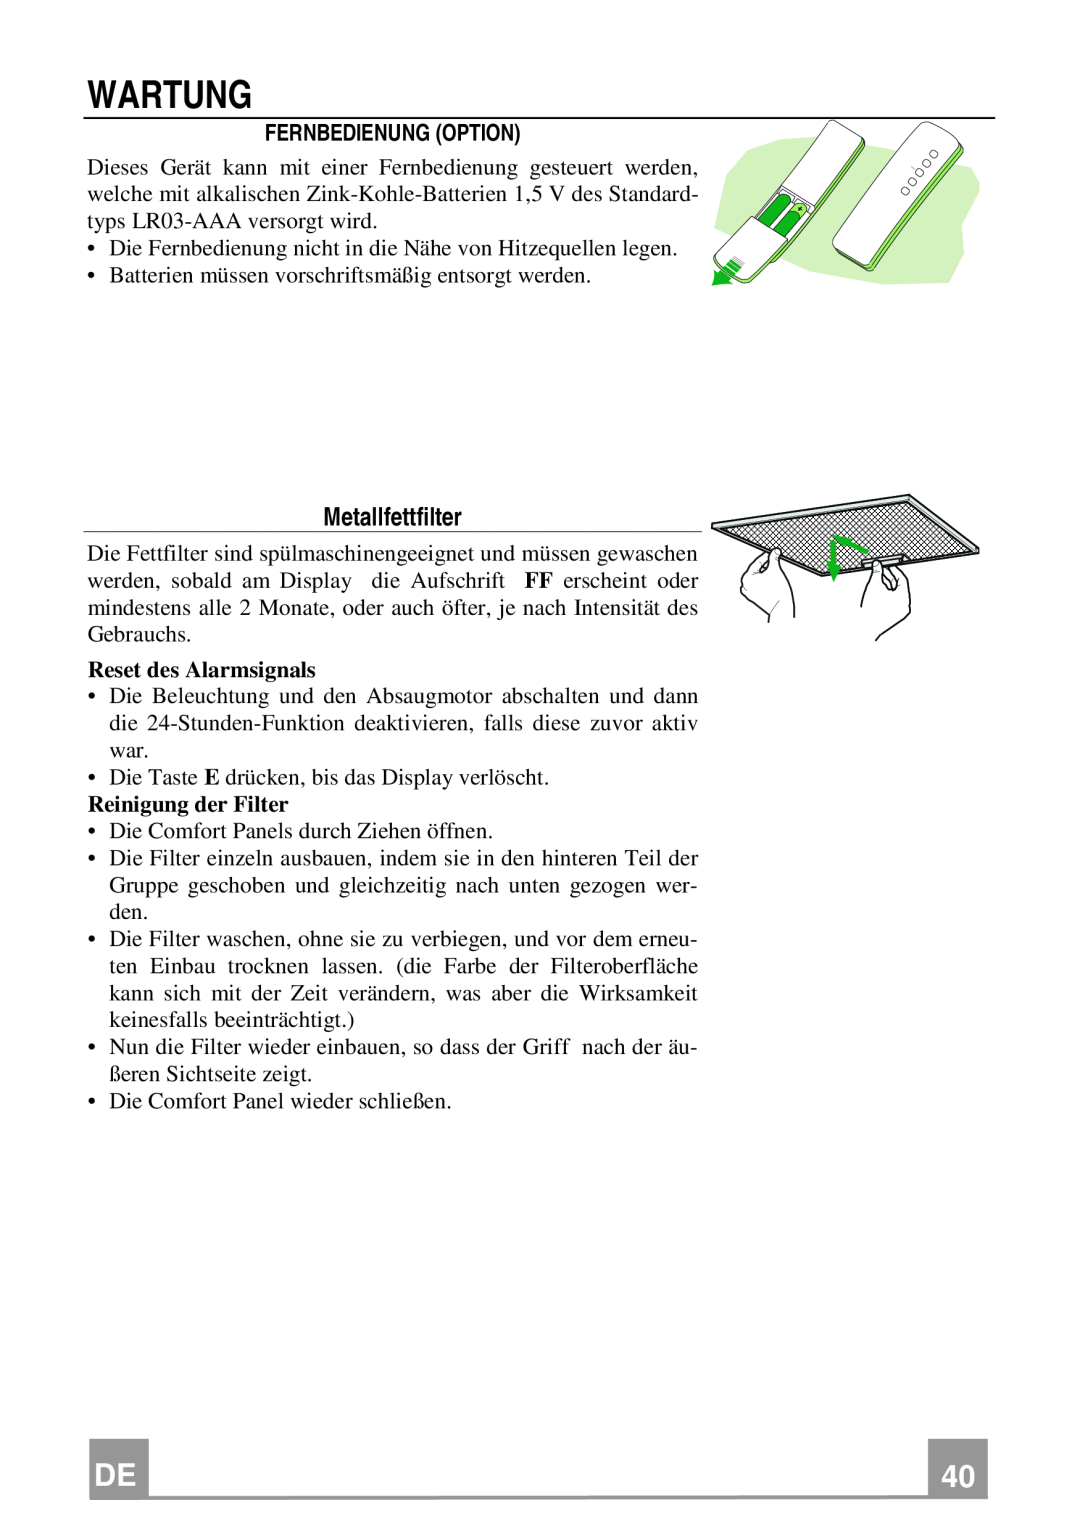 Franke Consumer Products FQD 907 manual Wartung, Metallfettfilter, Fernbedienung Option 